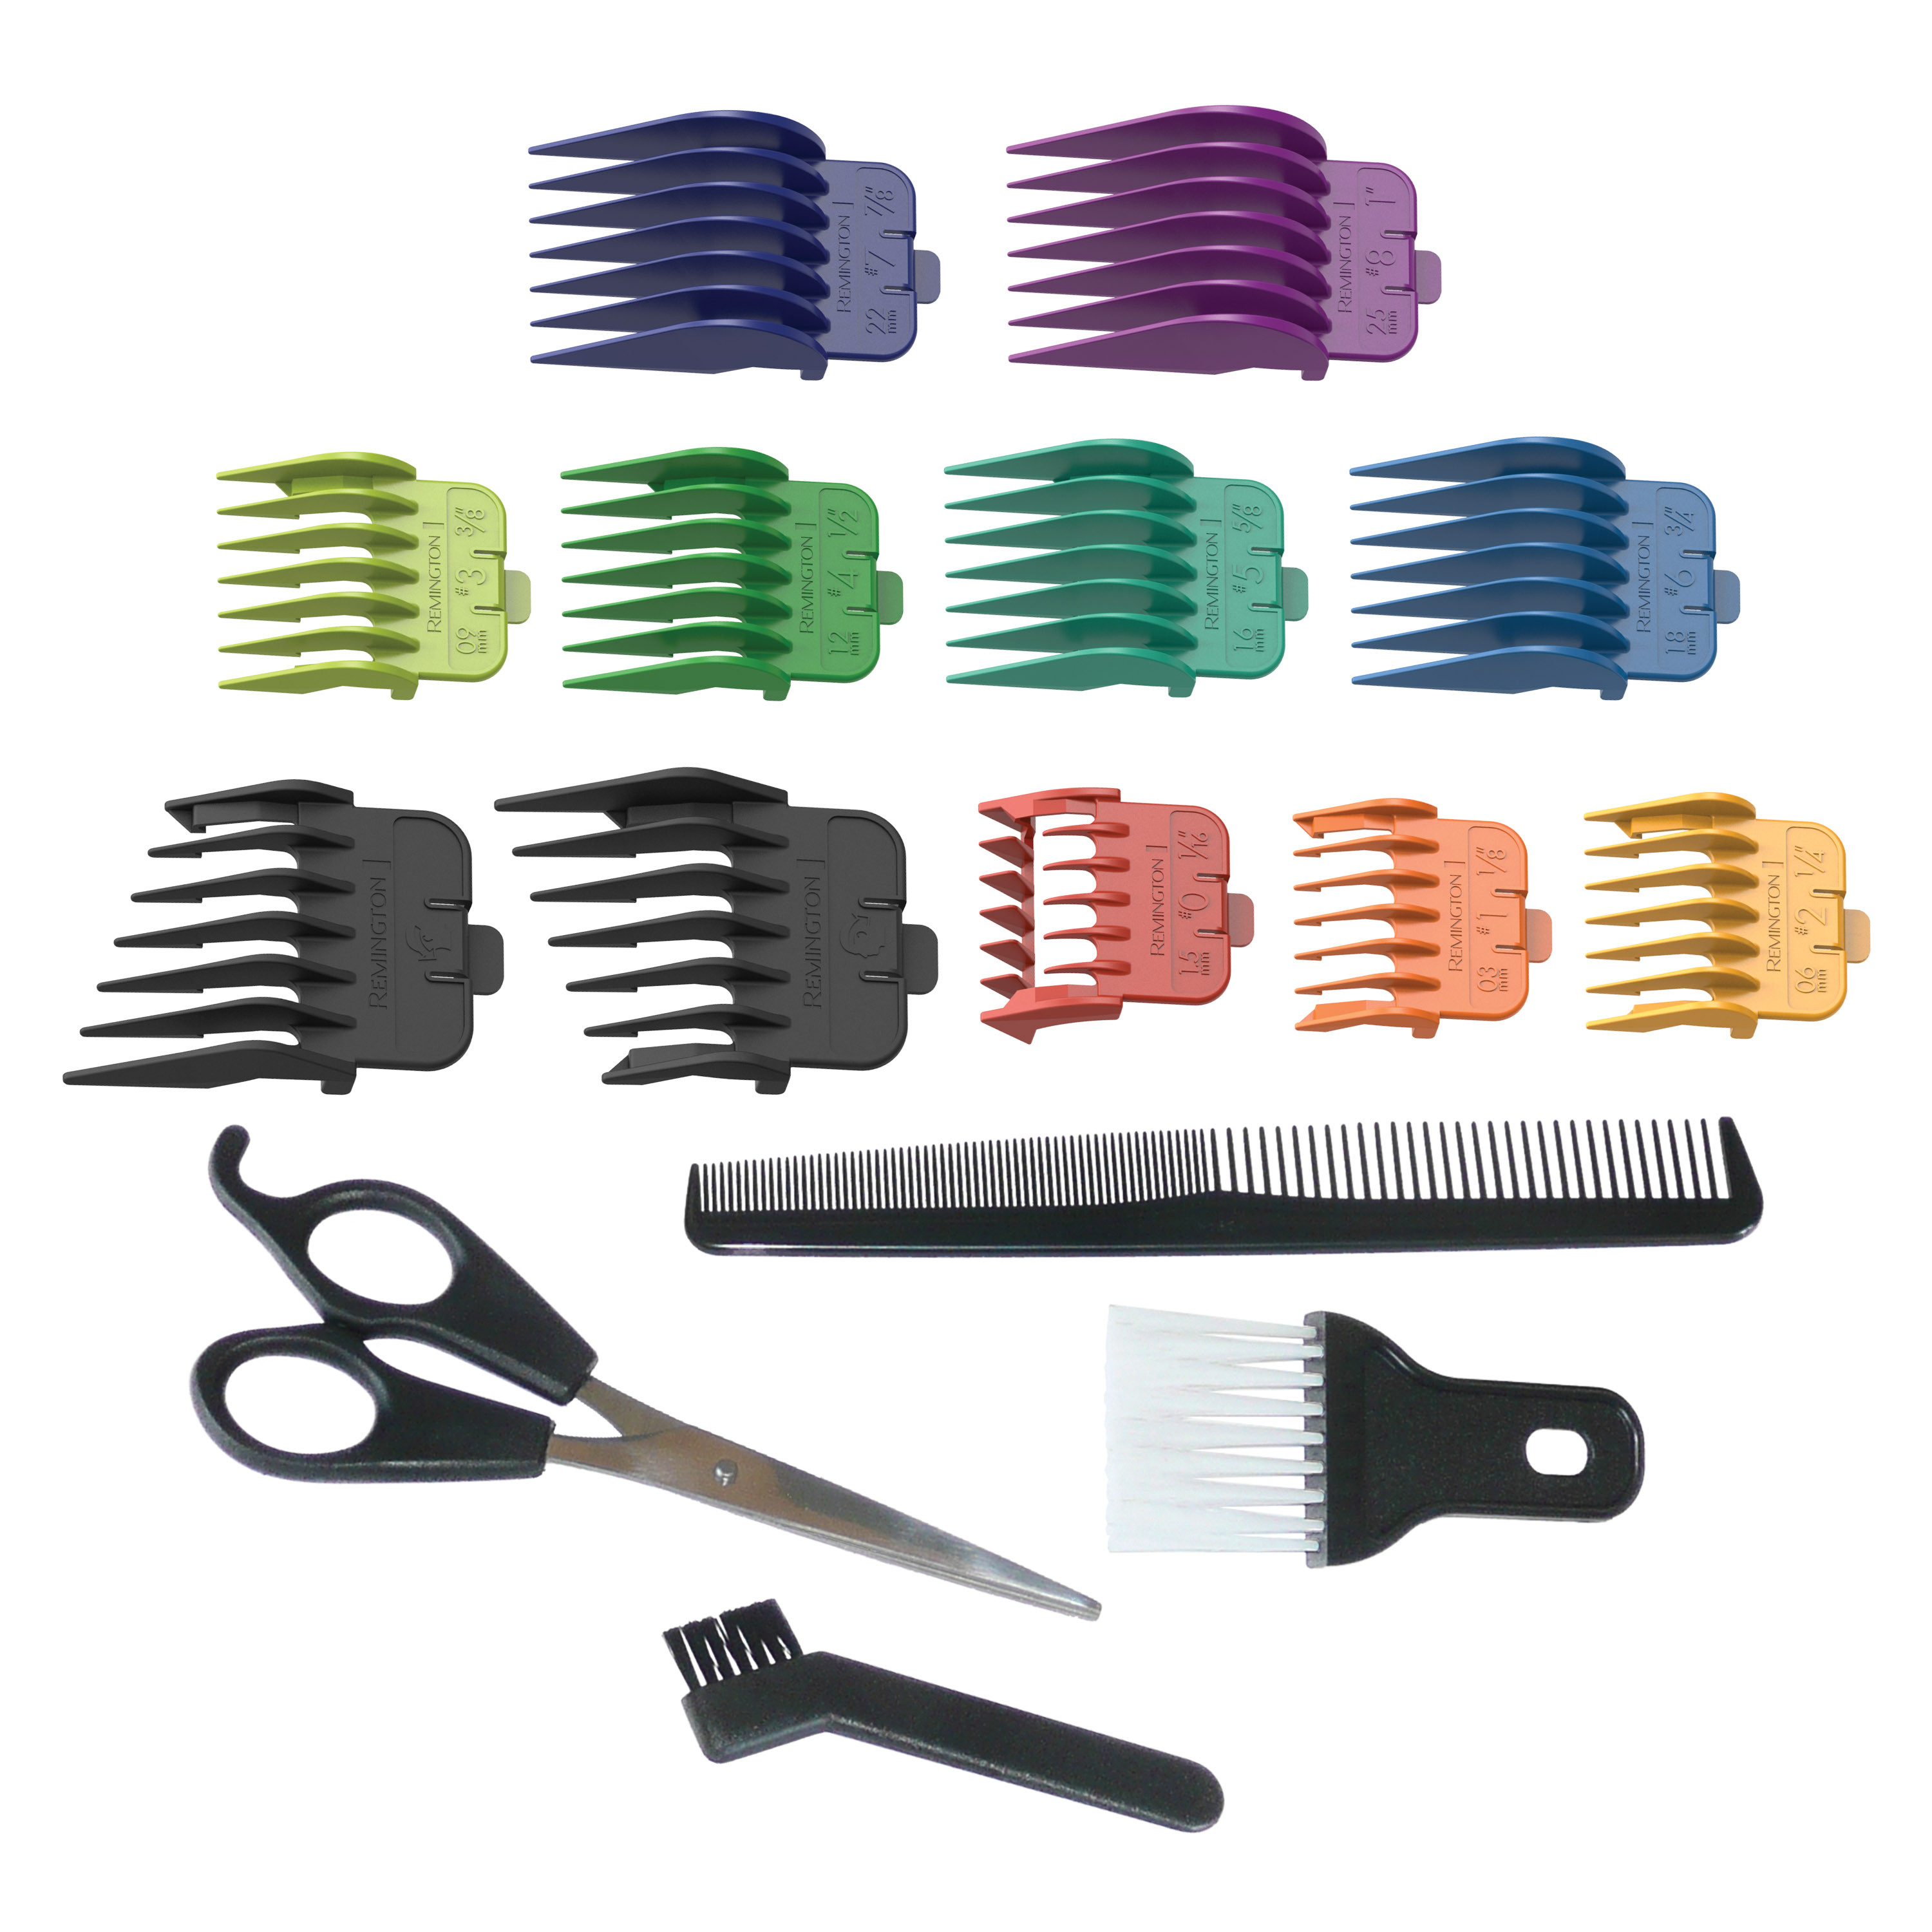 Imagen Total Grooming color kit cuchillas autoafilables HC4051 4